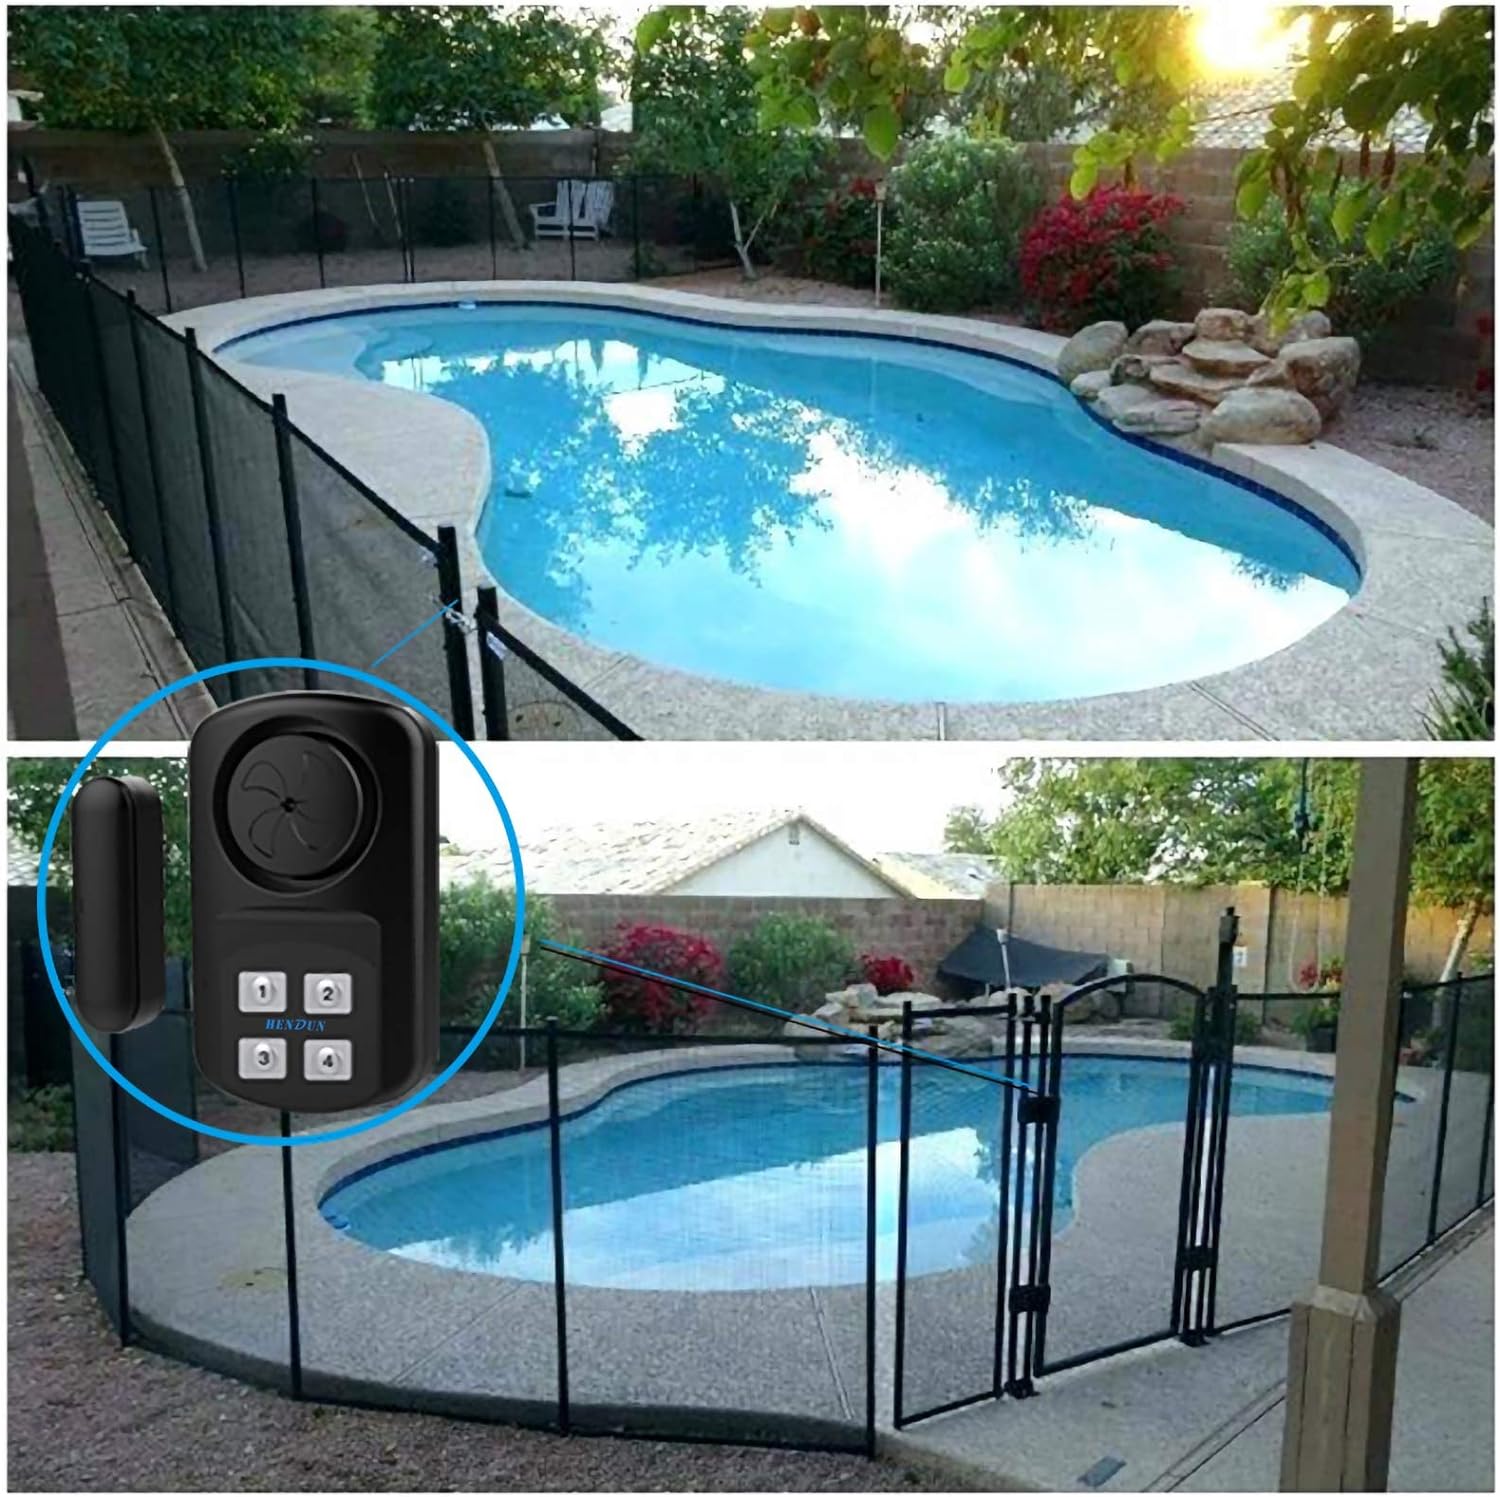 Generic HENDUN Pool Gate Alarm Outdoor Wireless with Remote, 140db Loud, Waterproof Door Alarm Sensor, Kids Safety, Weatherproof Garage